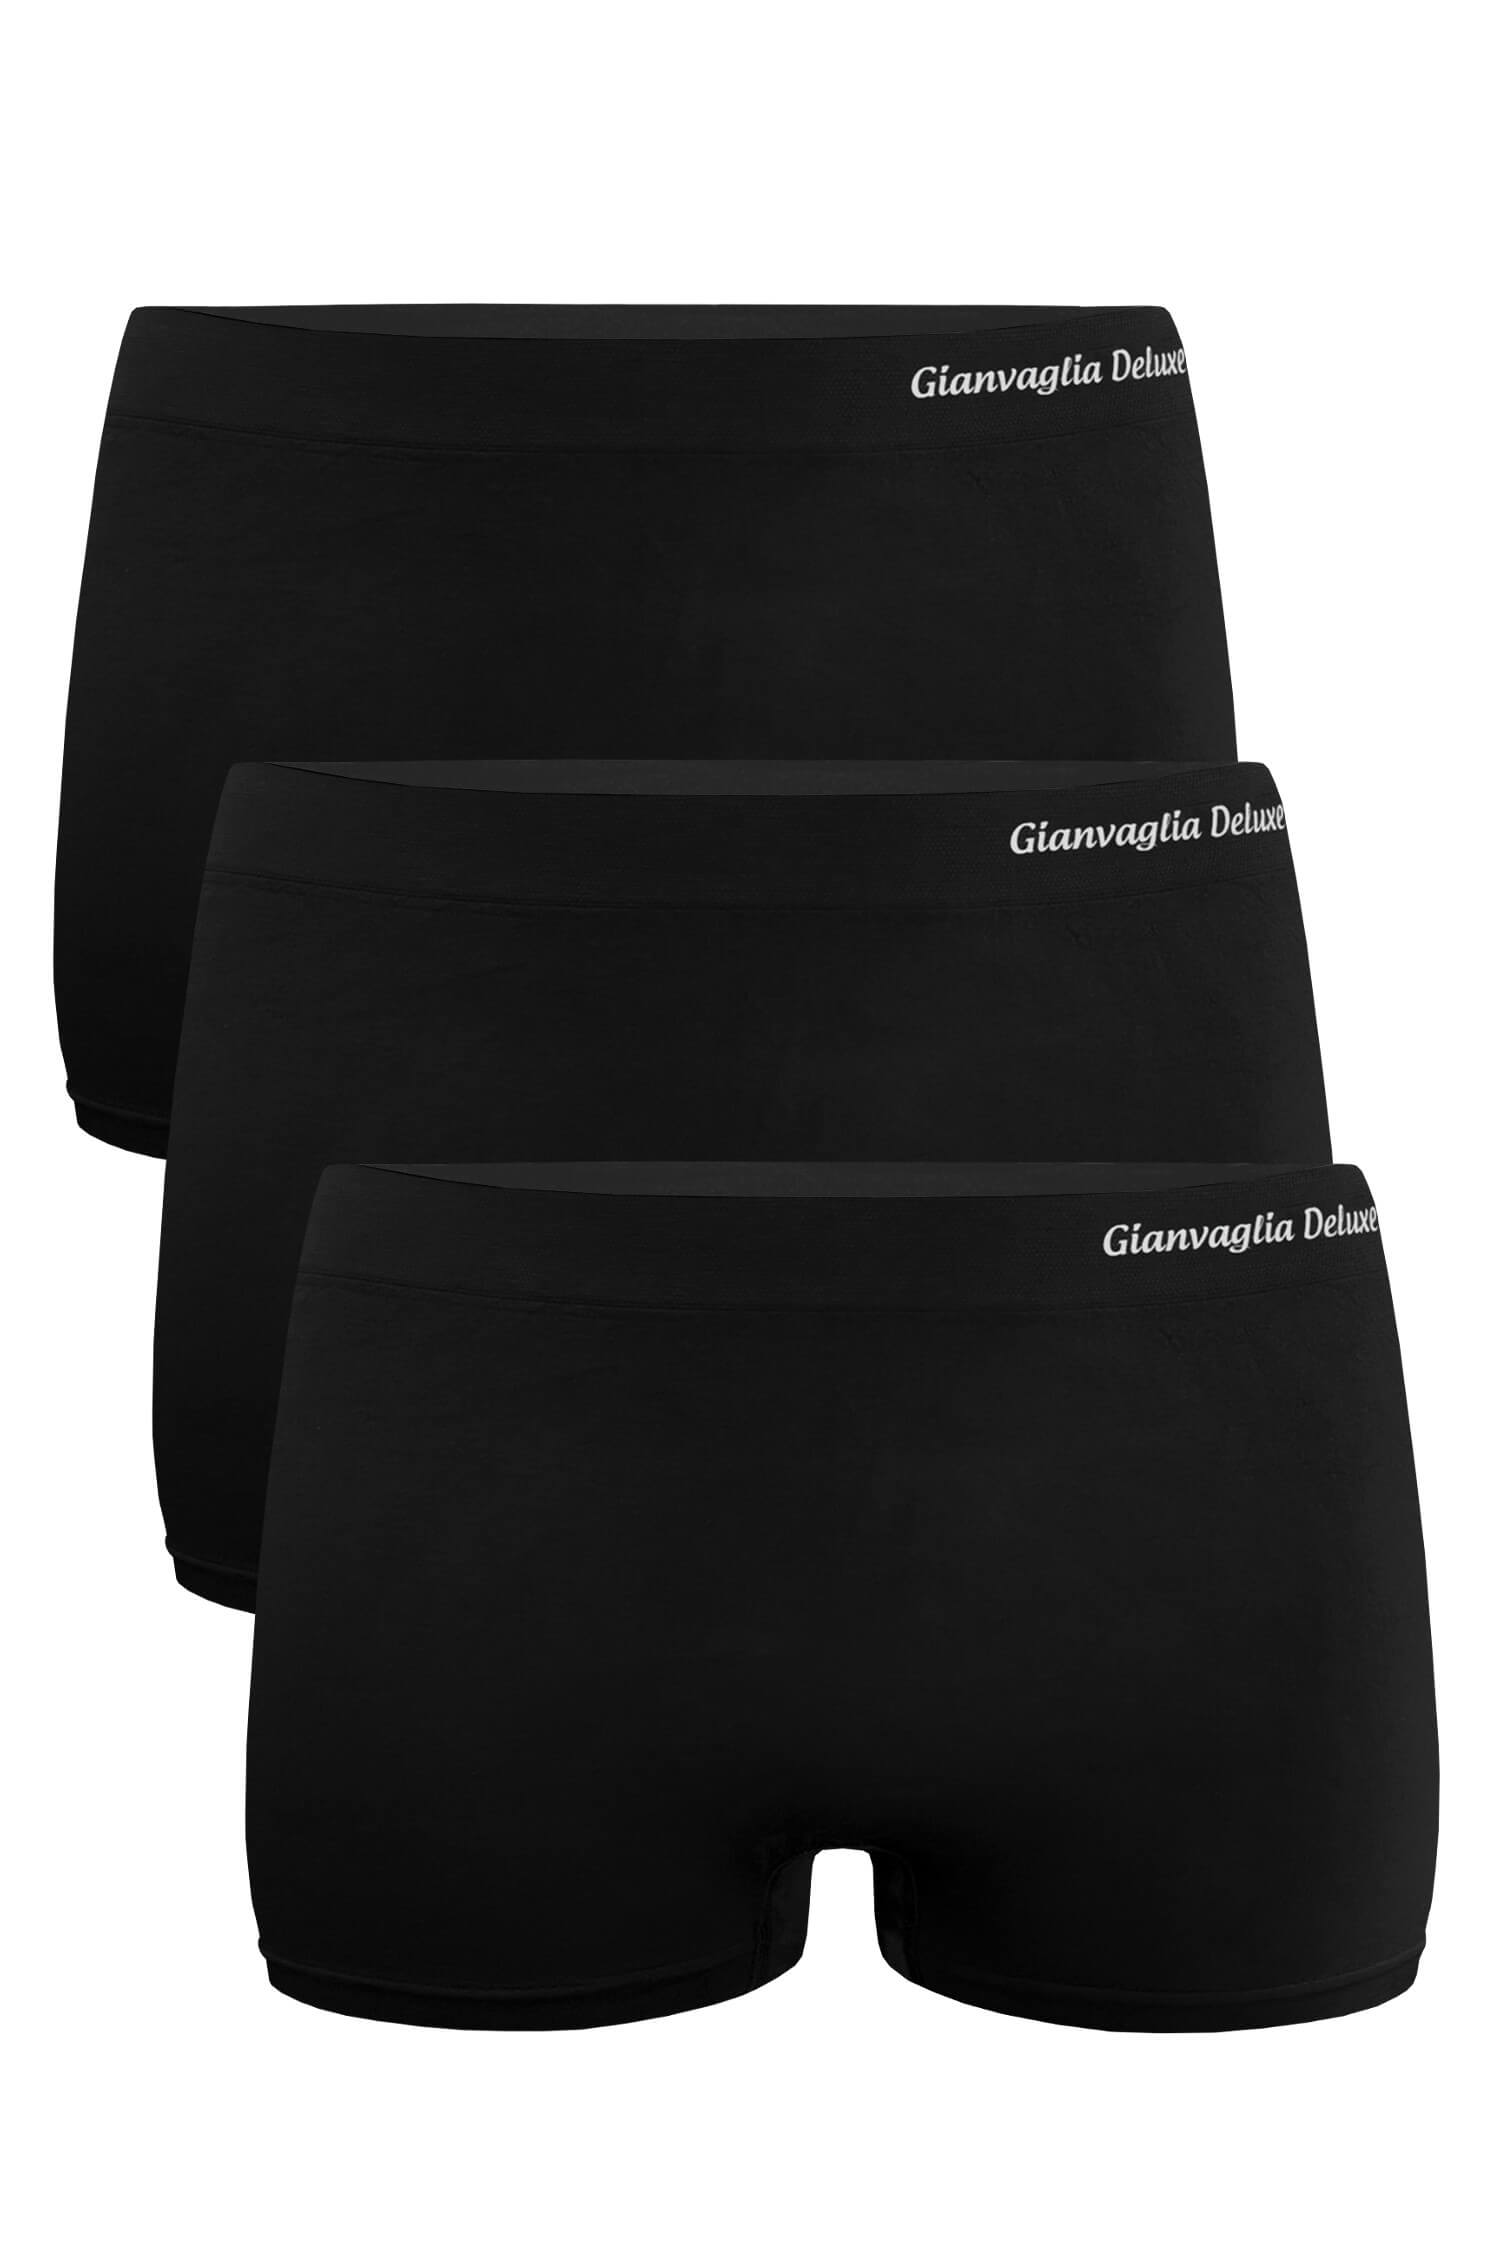 Gianvaglia Deluxe kalhotky s nohavičkou 3007 - 3 bal. 3XL černá